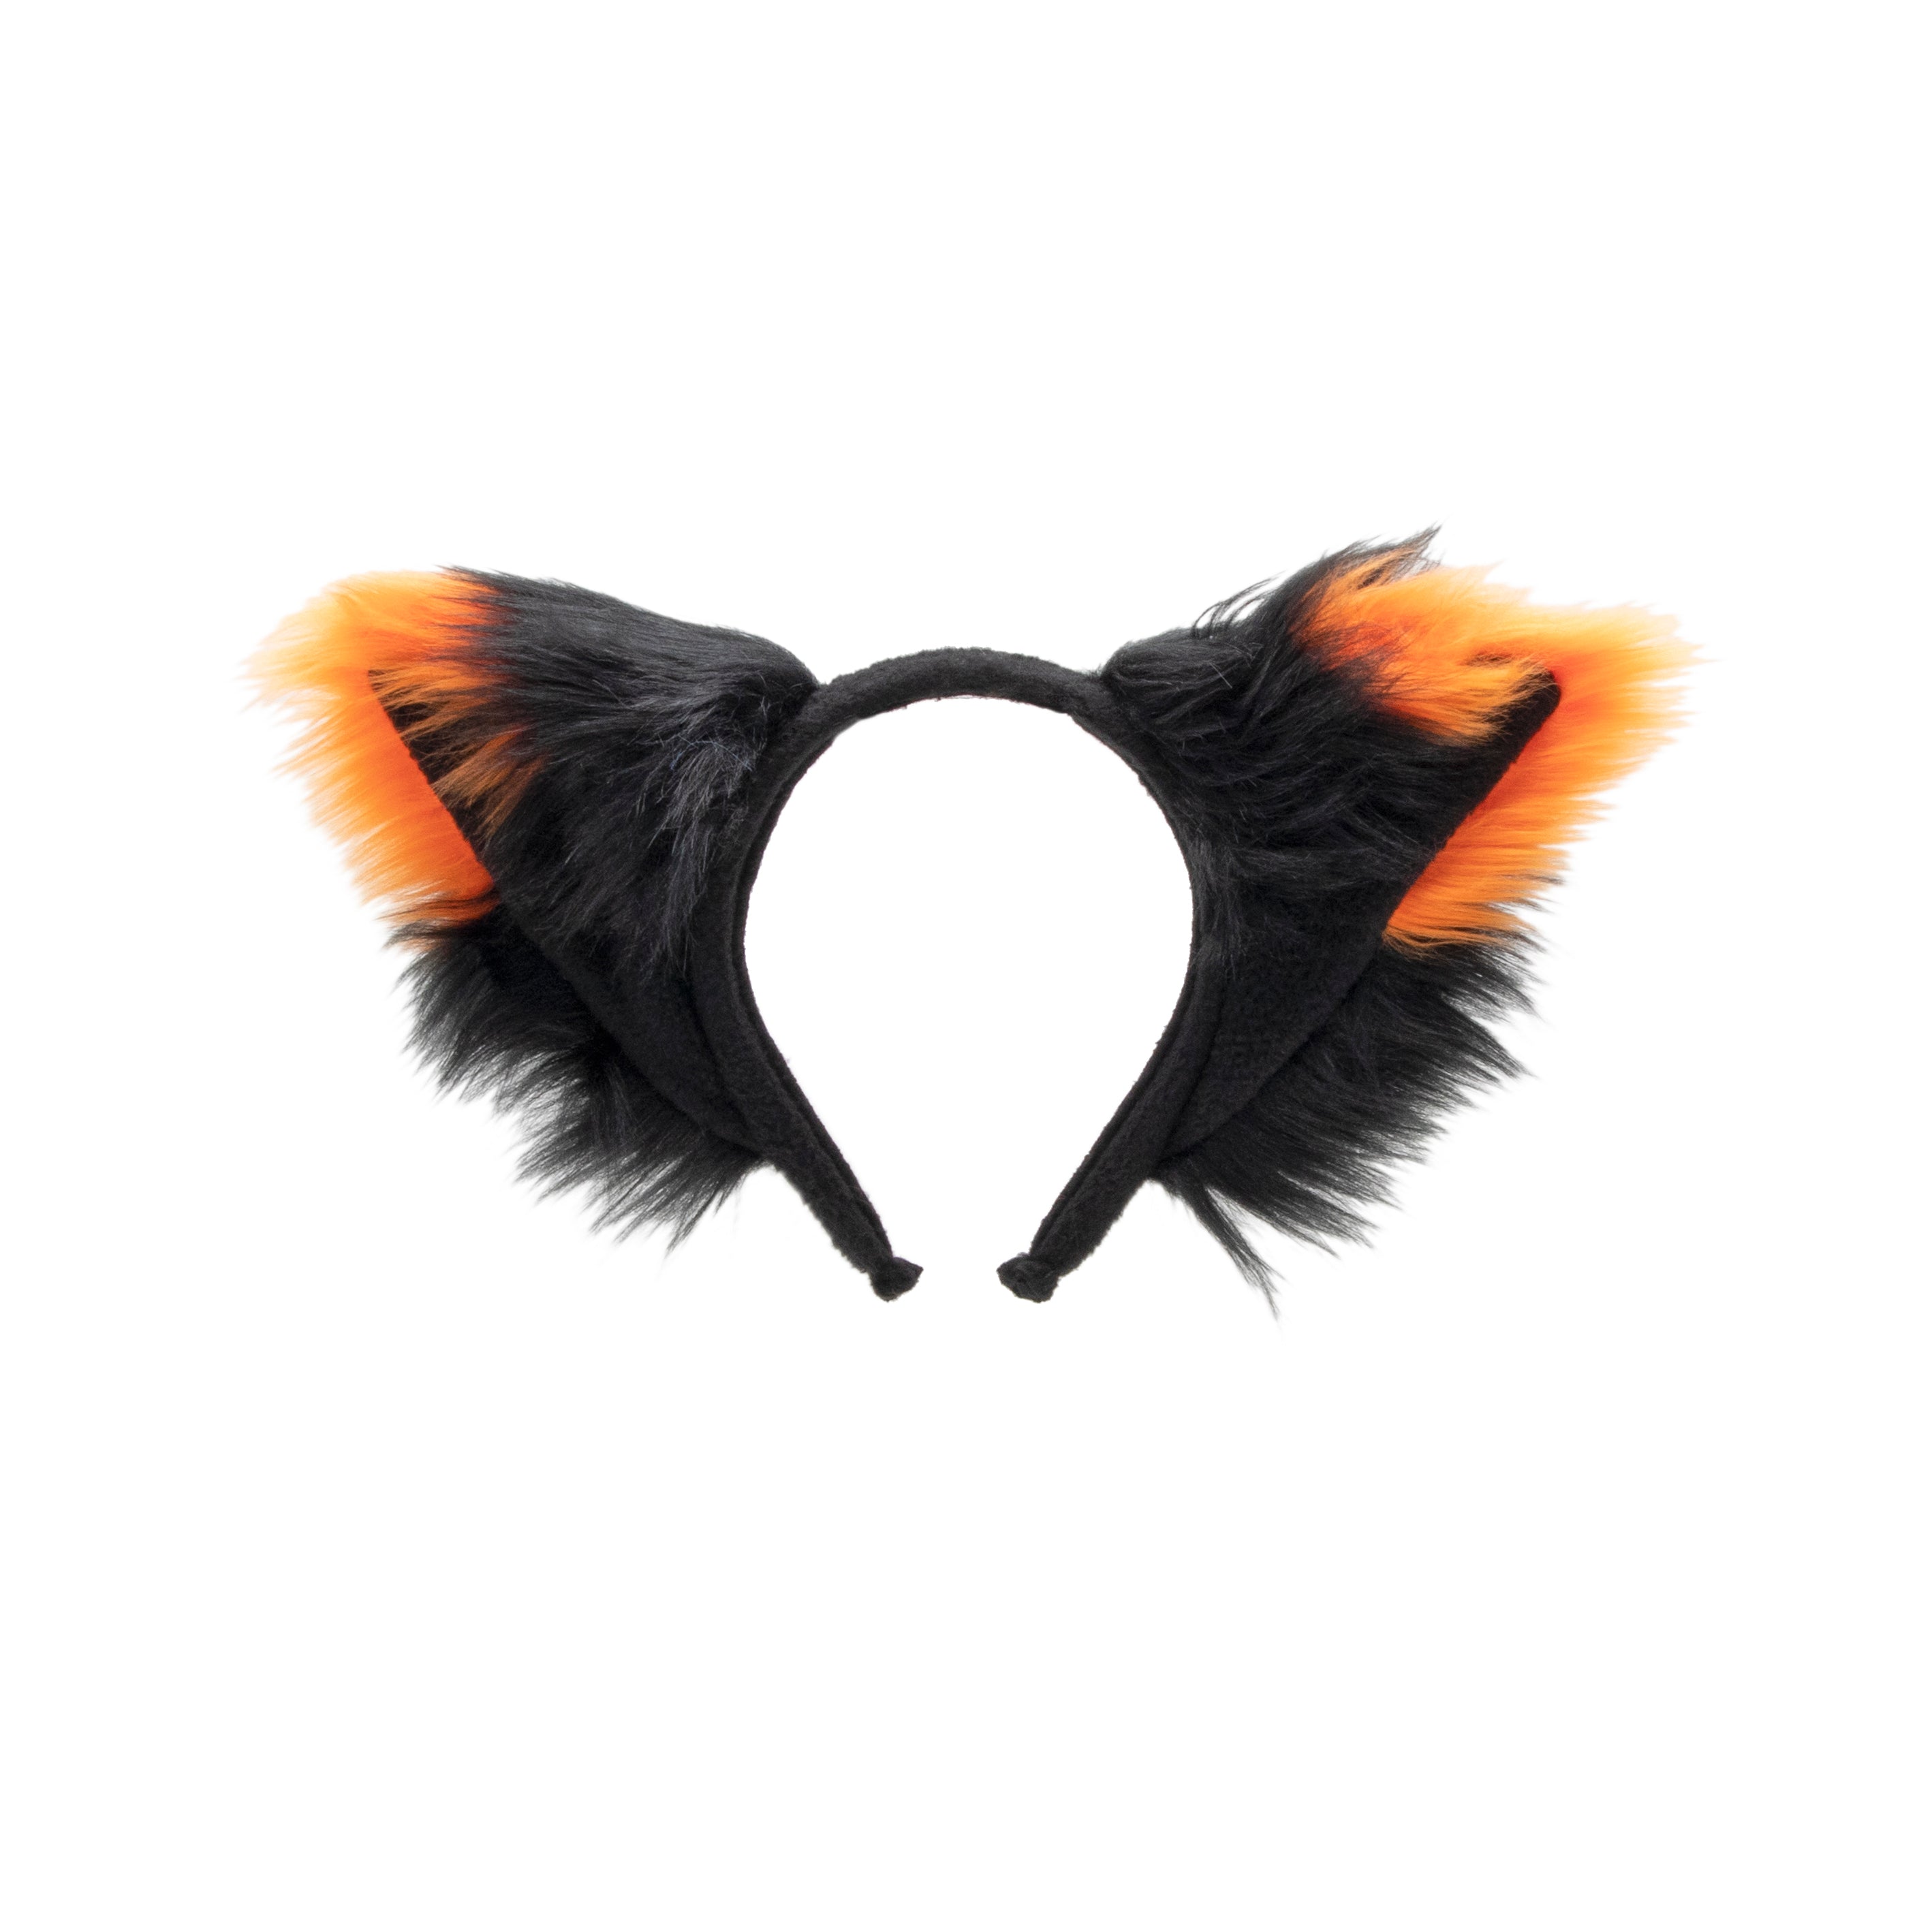 Yip Tip Ear Headband - Pawstar Pawstar Ear Headband autopostr_pinterest_64606, canine, cosplay, costume, ear, fox, furry, orange, ship-15, ship-15day